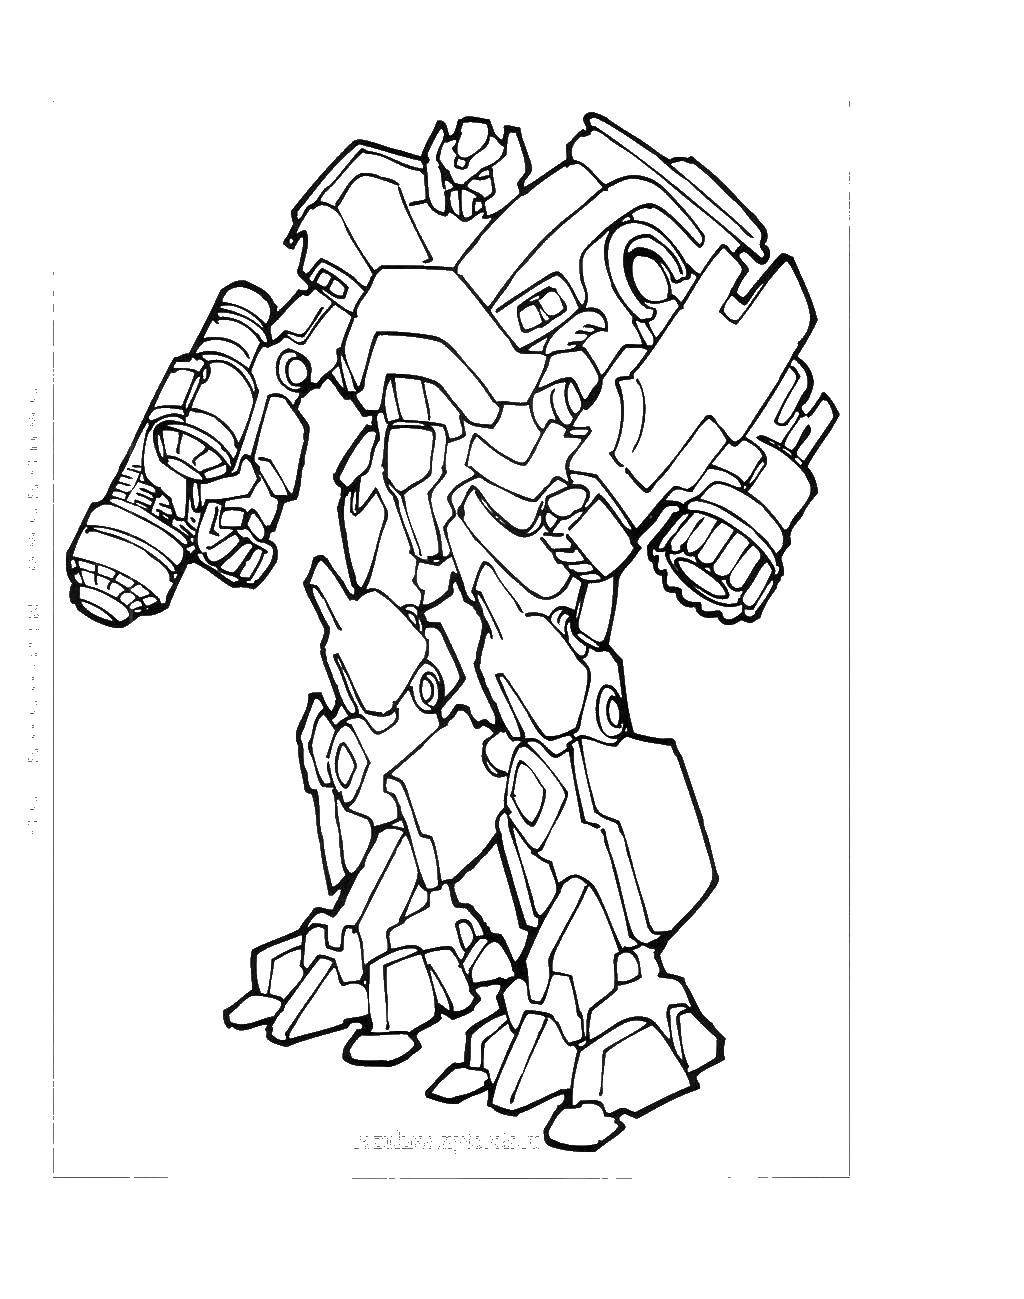 Coloring Transformer with guns. Category transformers. Tags:  transformers, robots, guns.